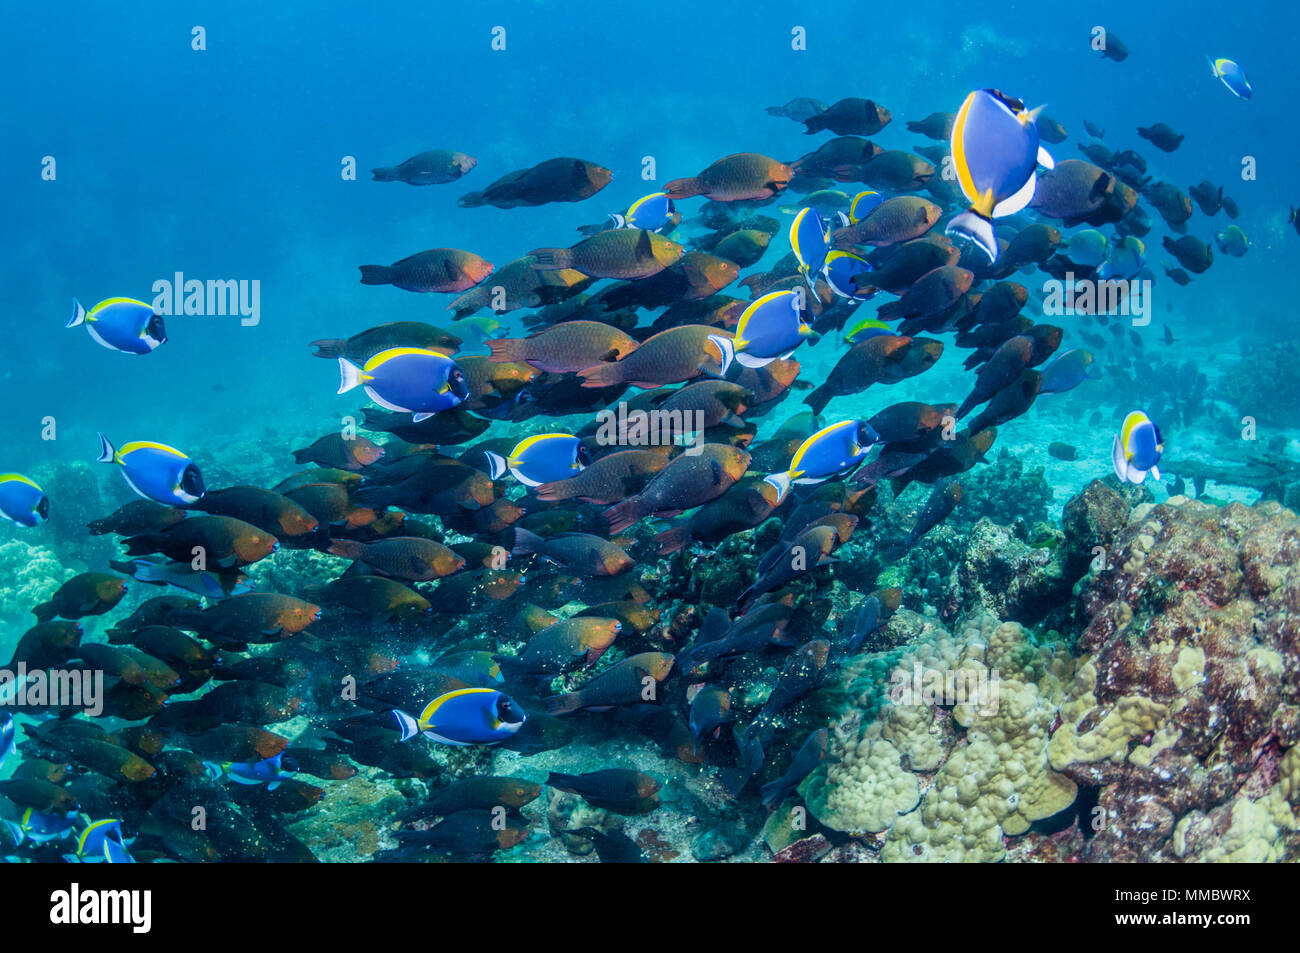 Greenthroat or Singapore parrotfish [Scarus prasiognathus].  Large school of females accompanied by Powderblue surgeonfish [Acanthurus leucosternon].  Stock Photo